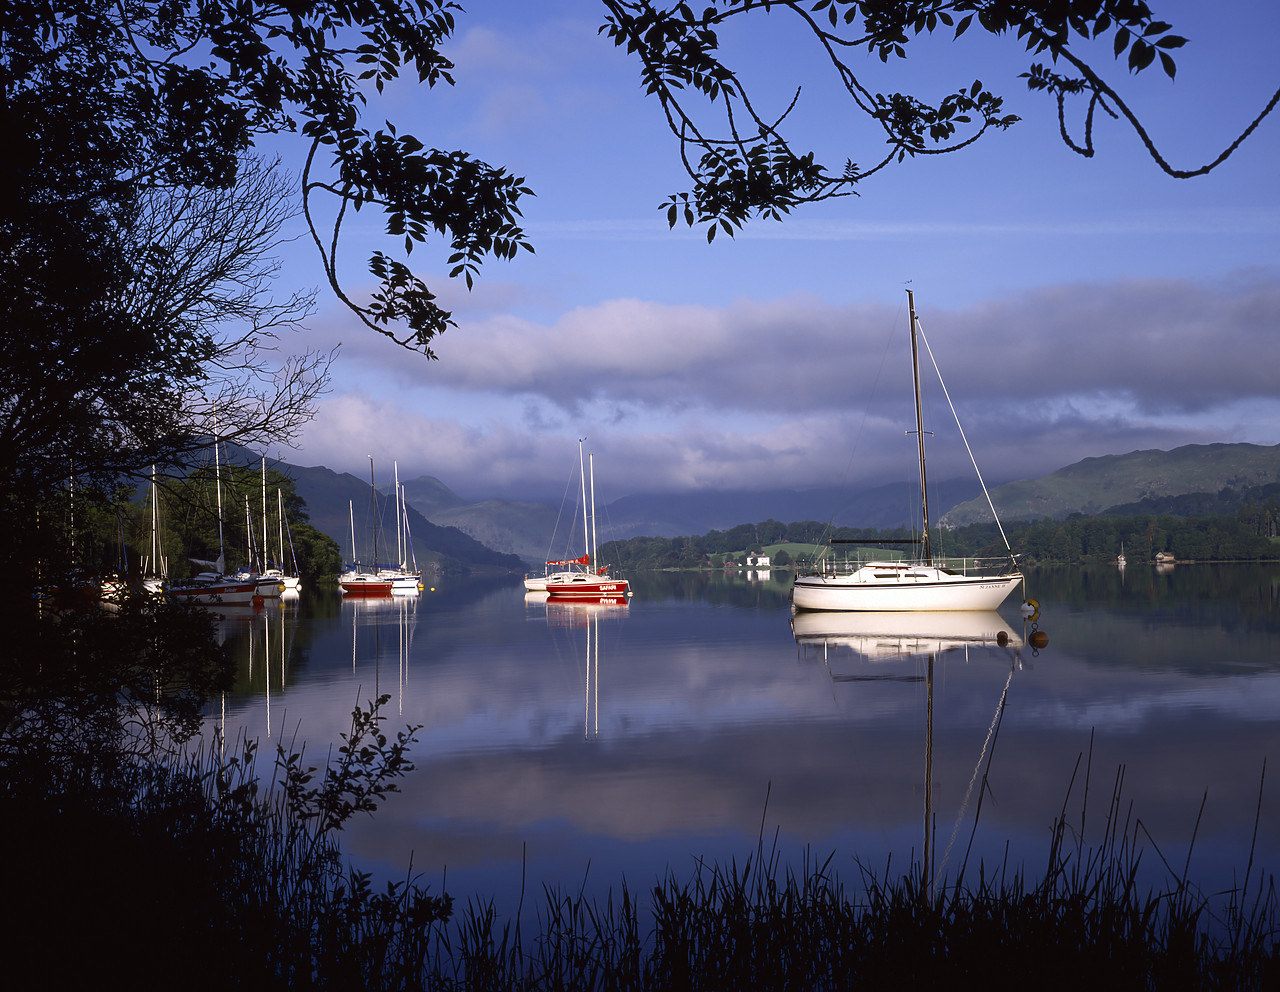 #934284-2 - Sailboats in Sharrow Bay, Ullswater, Lake District National Park, Cumbria, England